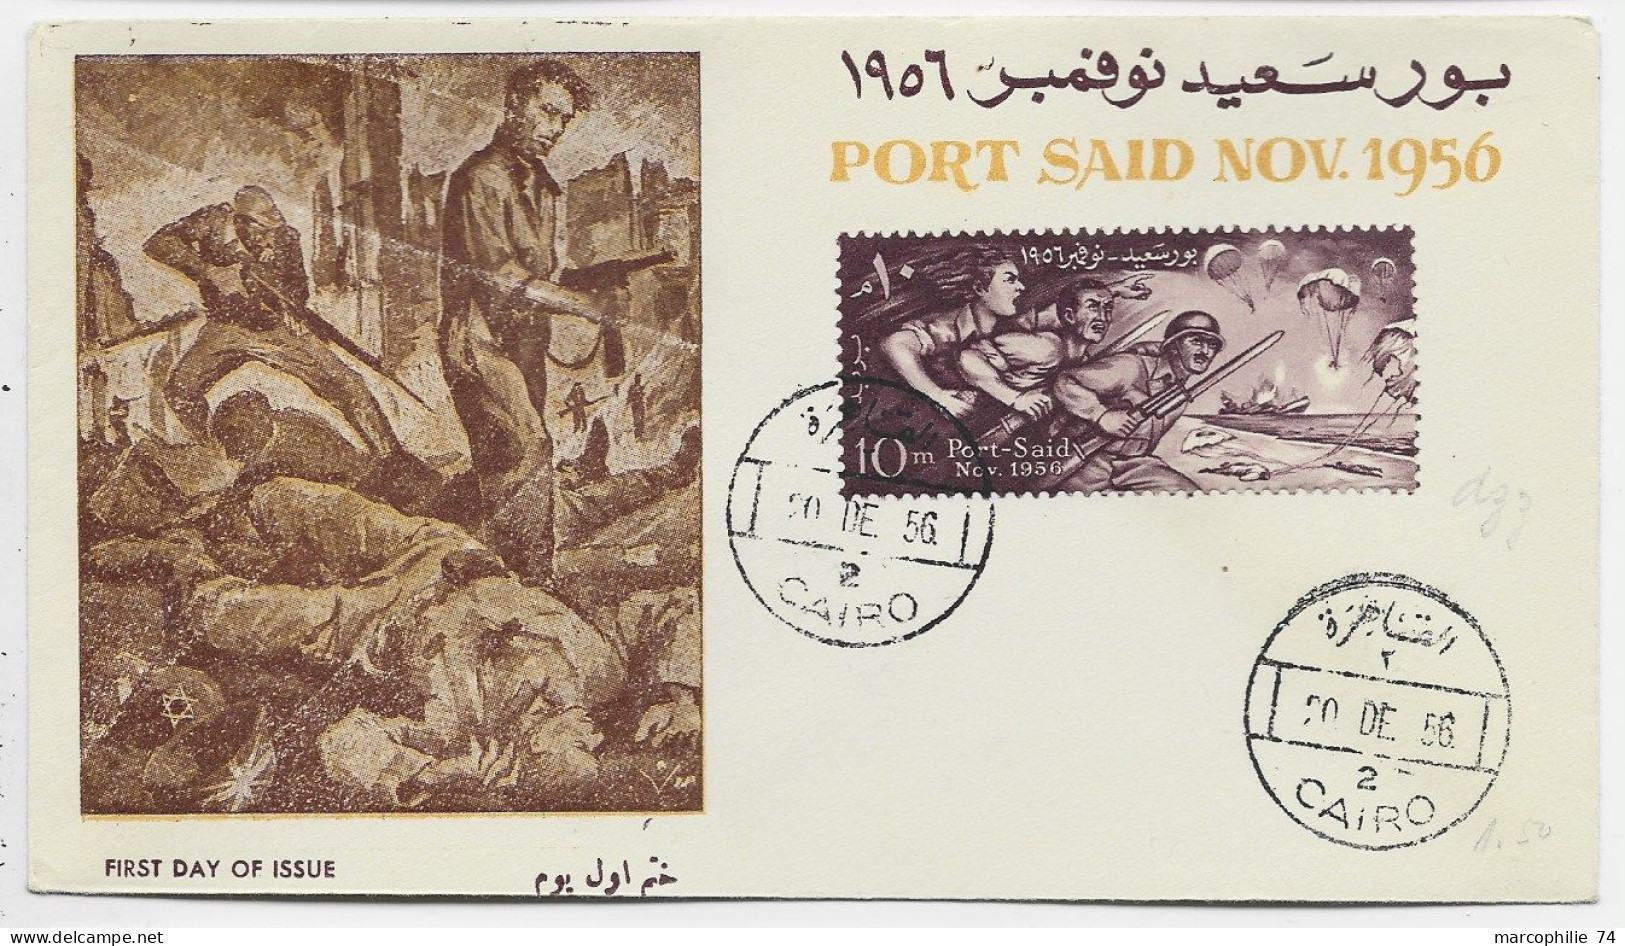 UAR 10M LETTRE COVER FDCPORT SAID NOV 1956 CAIRO MILITAIRE - Covers & Documents